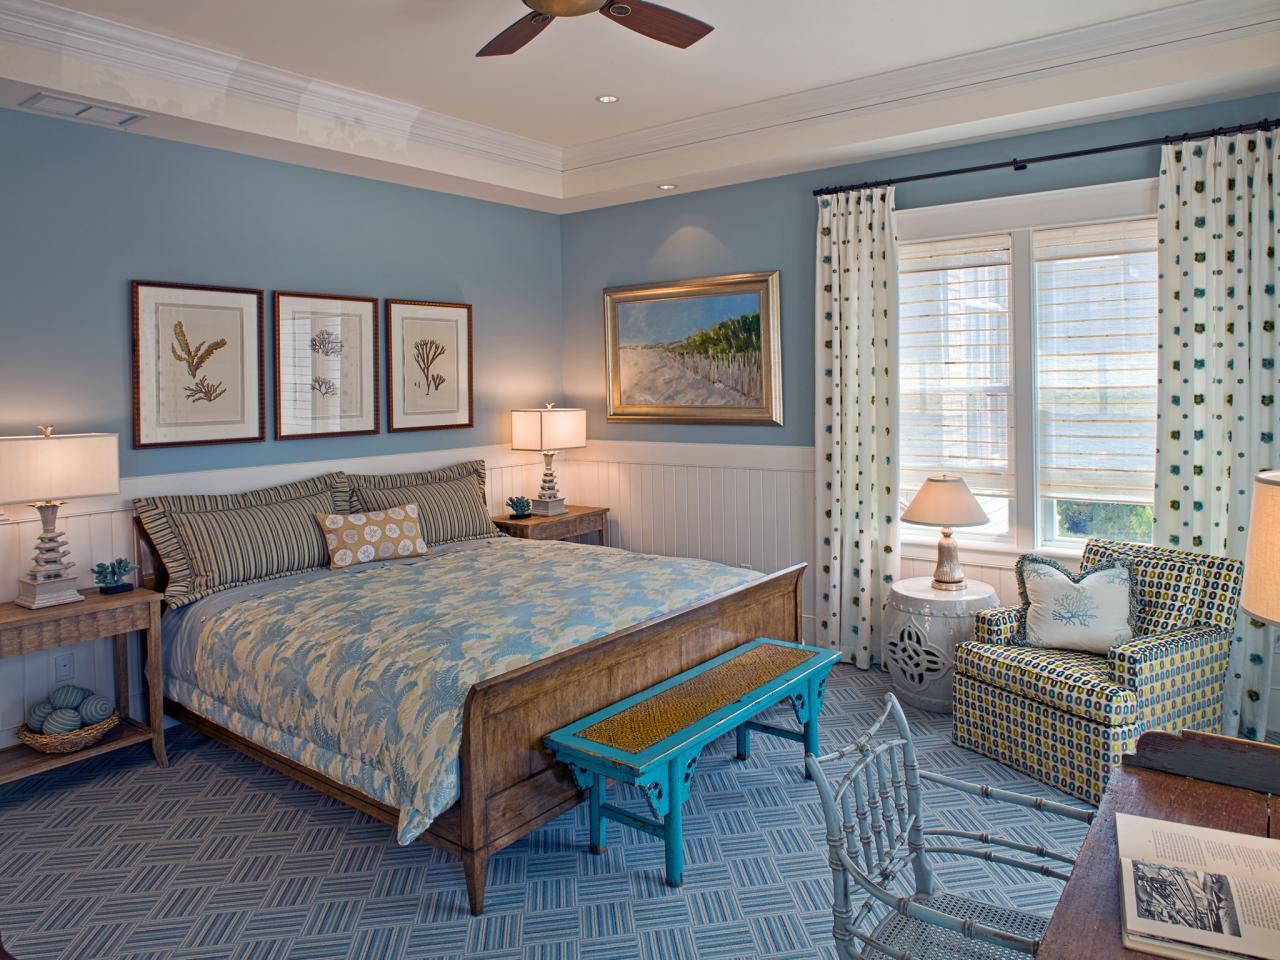 Ocean Blue Bedroom Decor